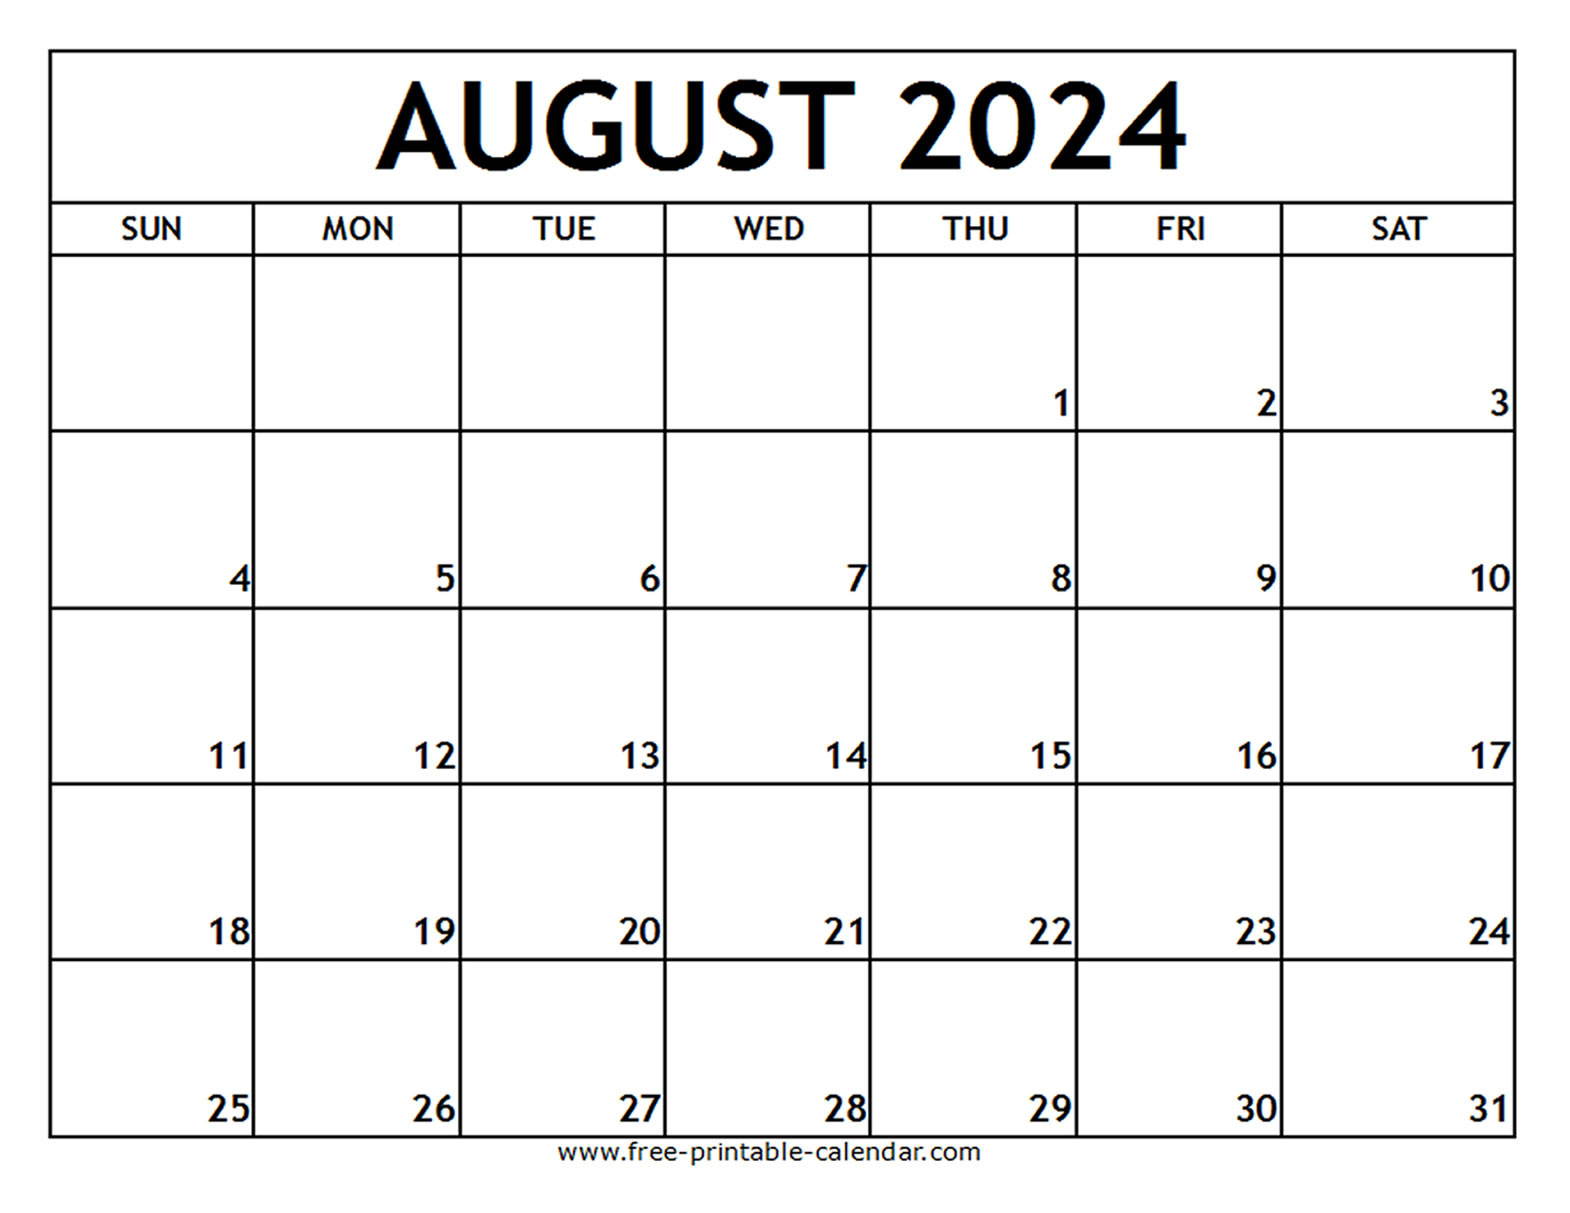 August 2024 Printable Calendar - Free-Printable-Calendar throughout Free Printable August 2024 Calendar Page